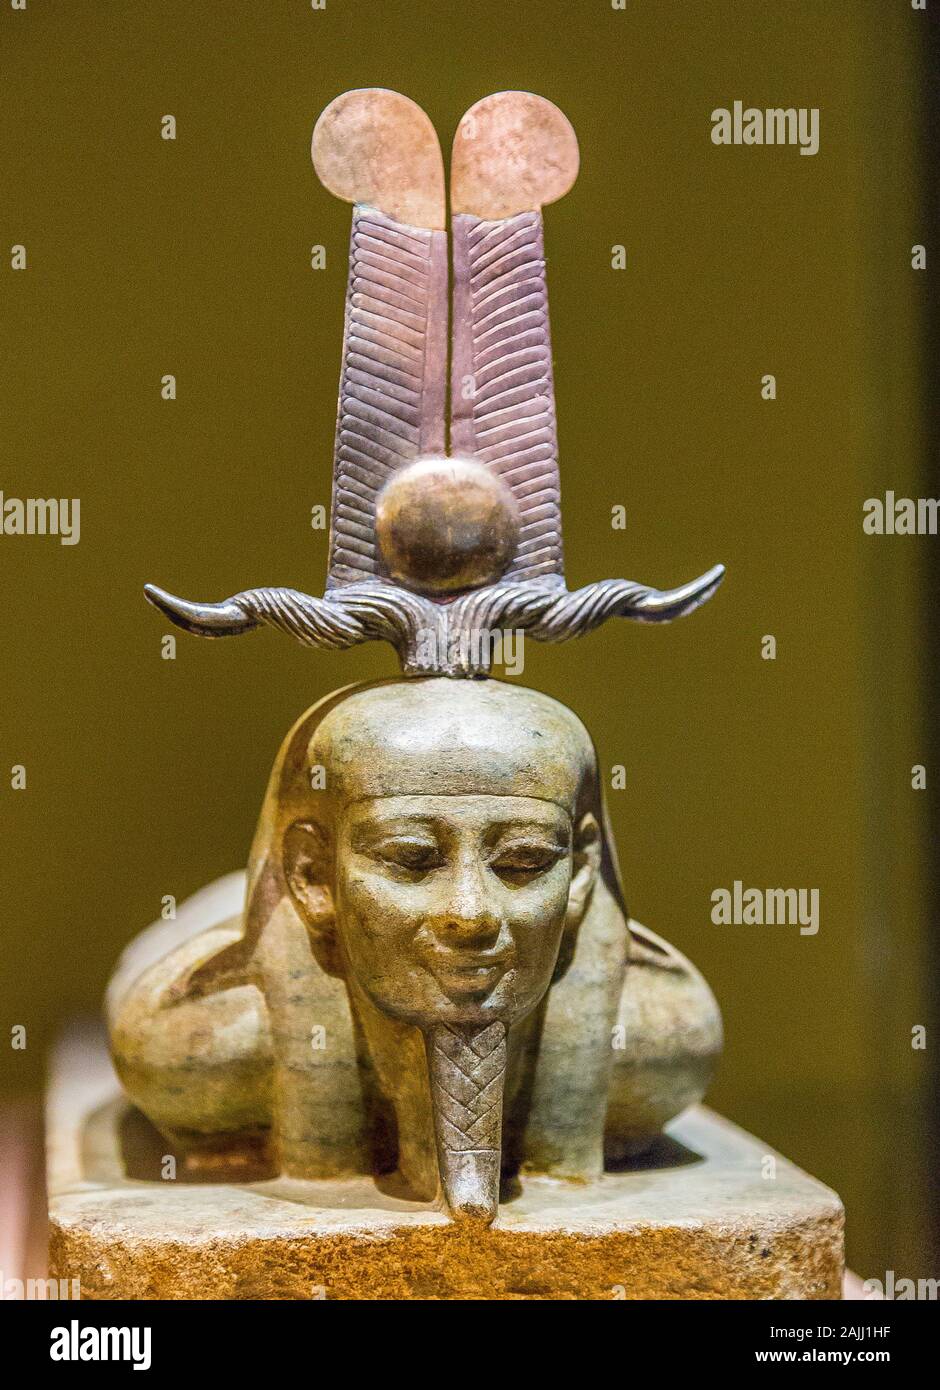 Photo taken during the opening visit of the exhibition “Osiris, Egypt's Sunken Mysteries”. Detail of a statue of the god Osiris awakening. Stock Photo